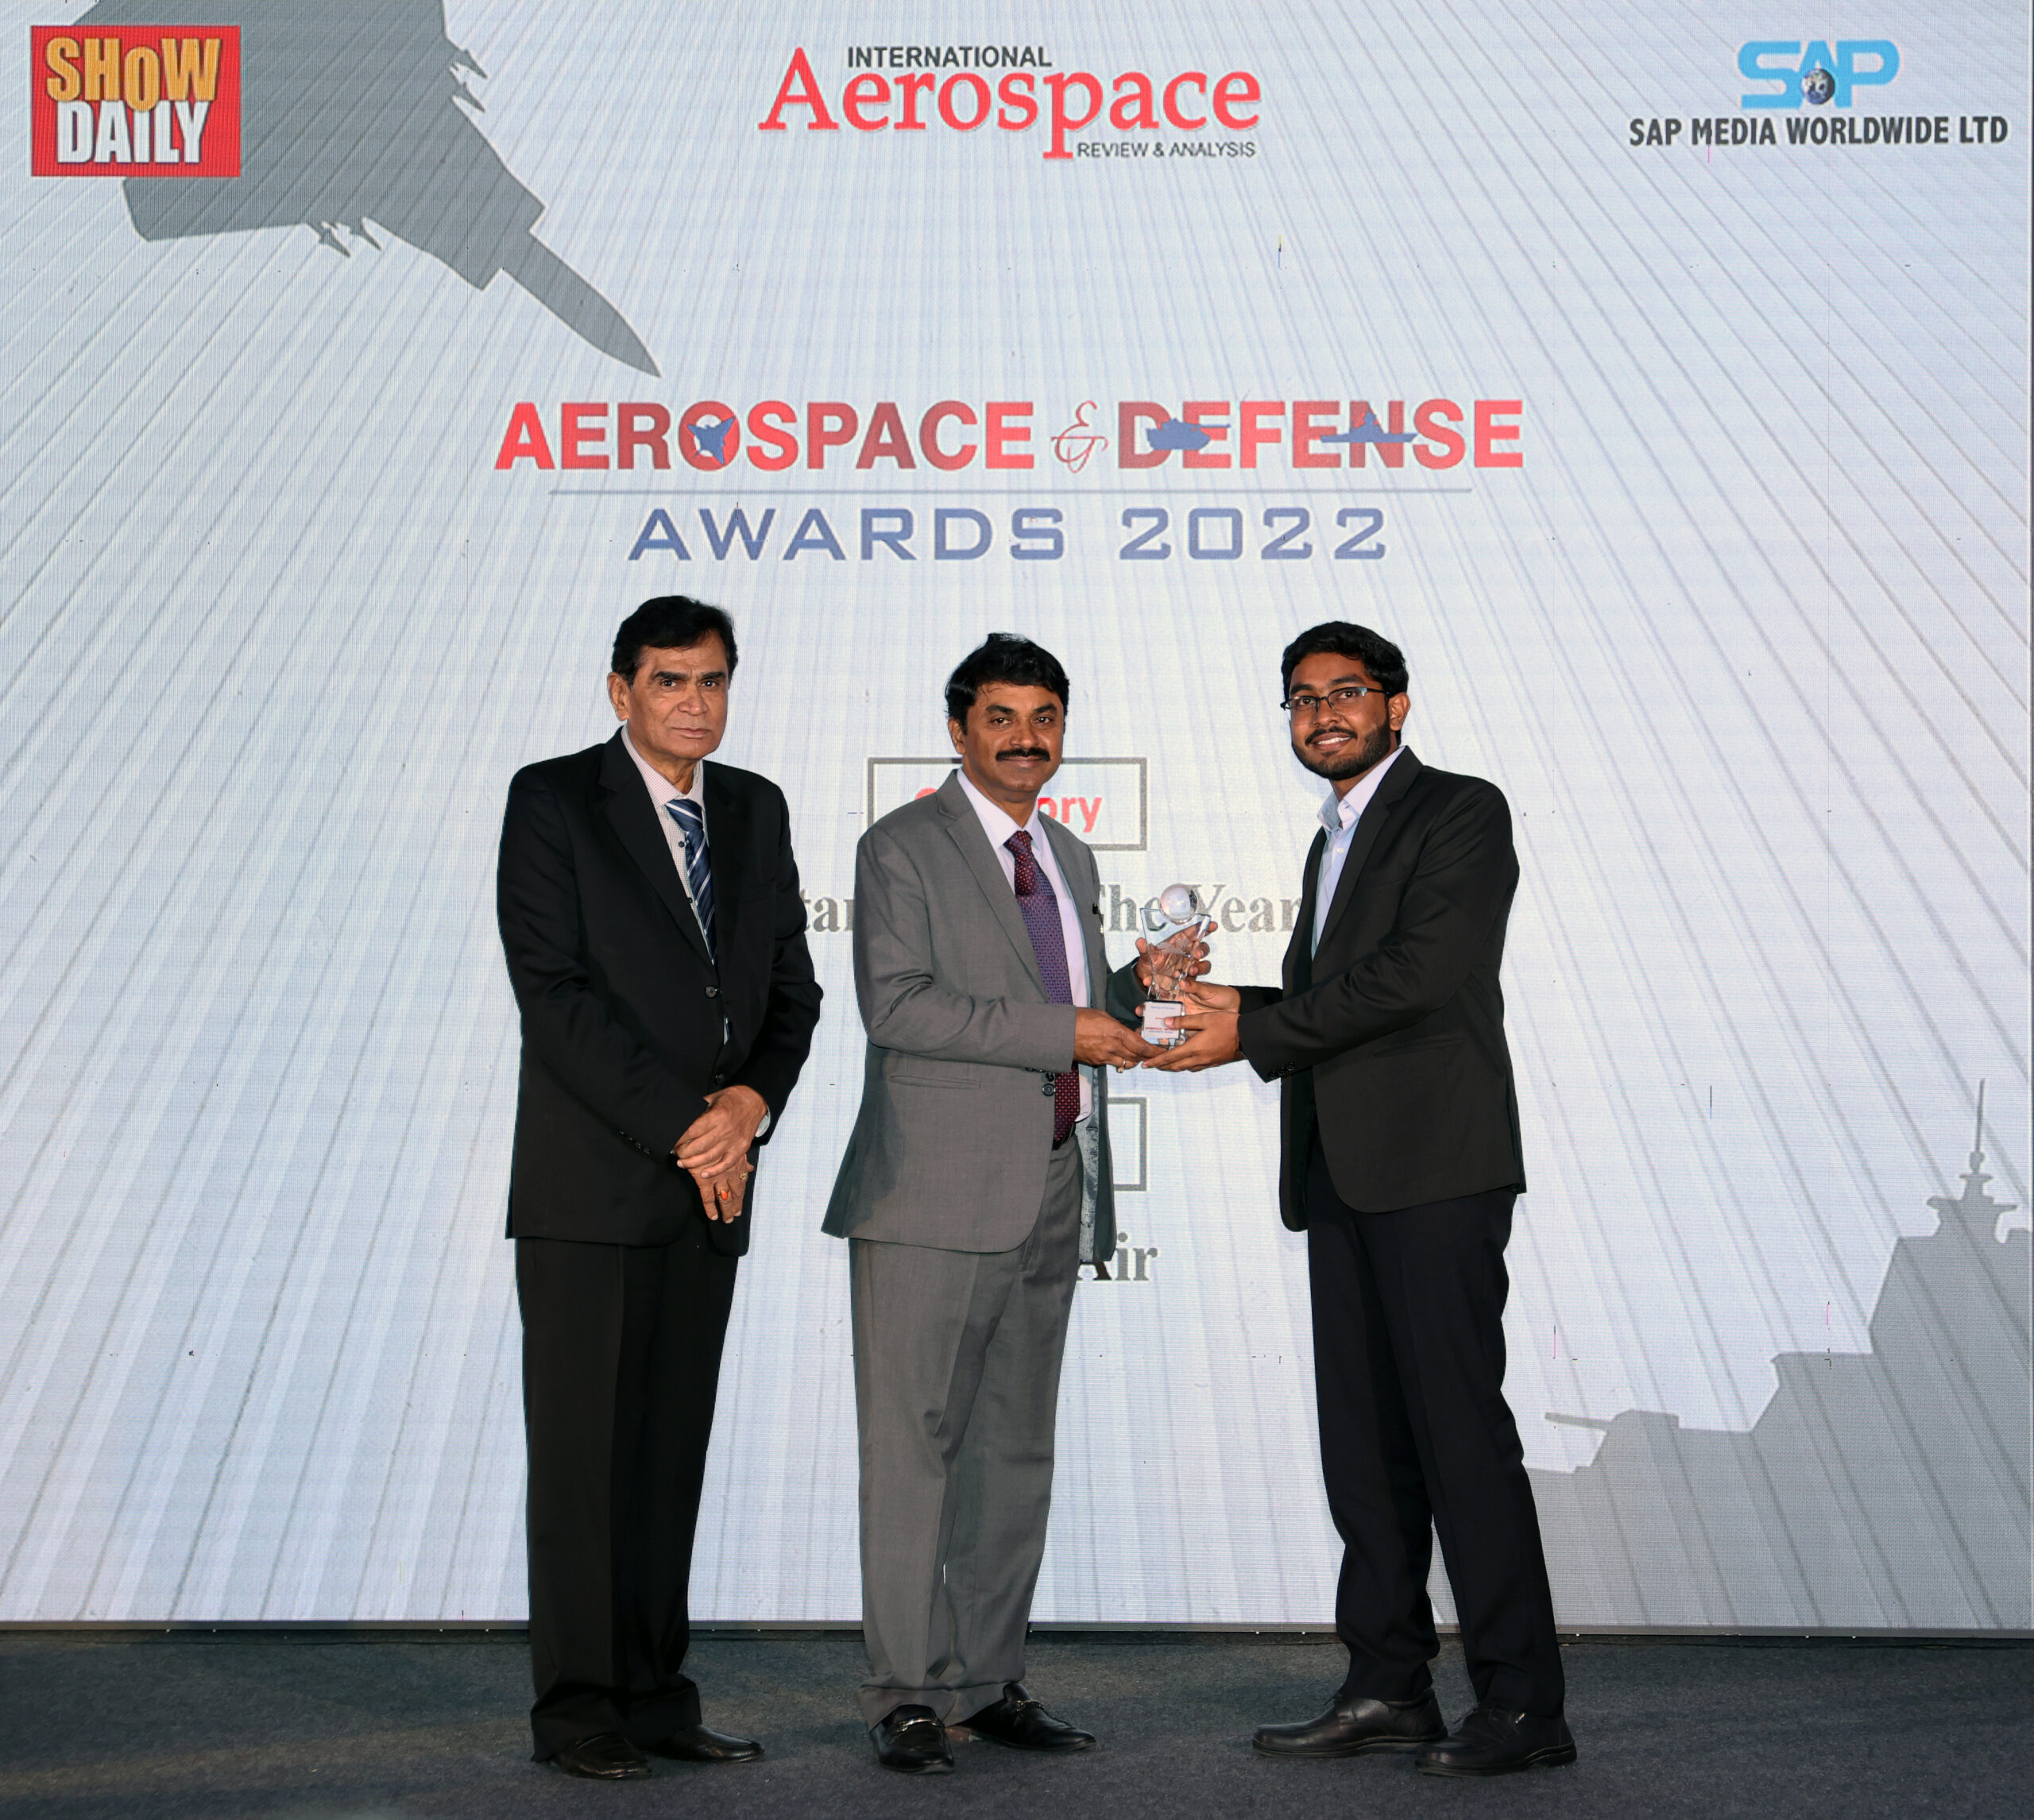 EndureAir - Aerospace & Defense Awards 2022